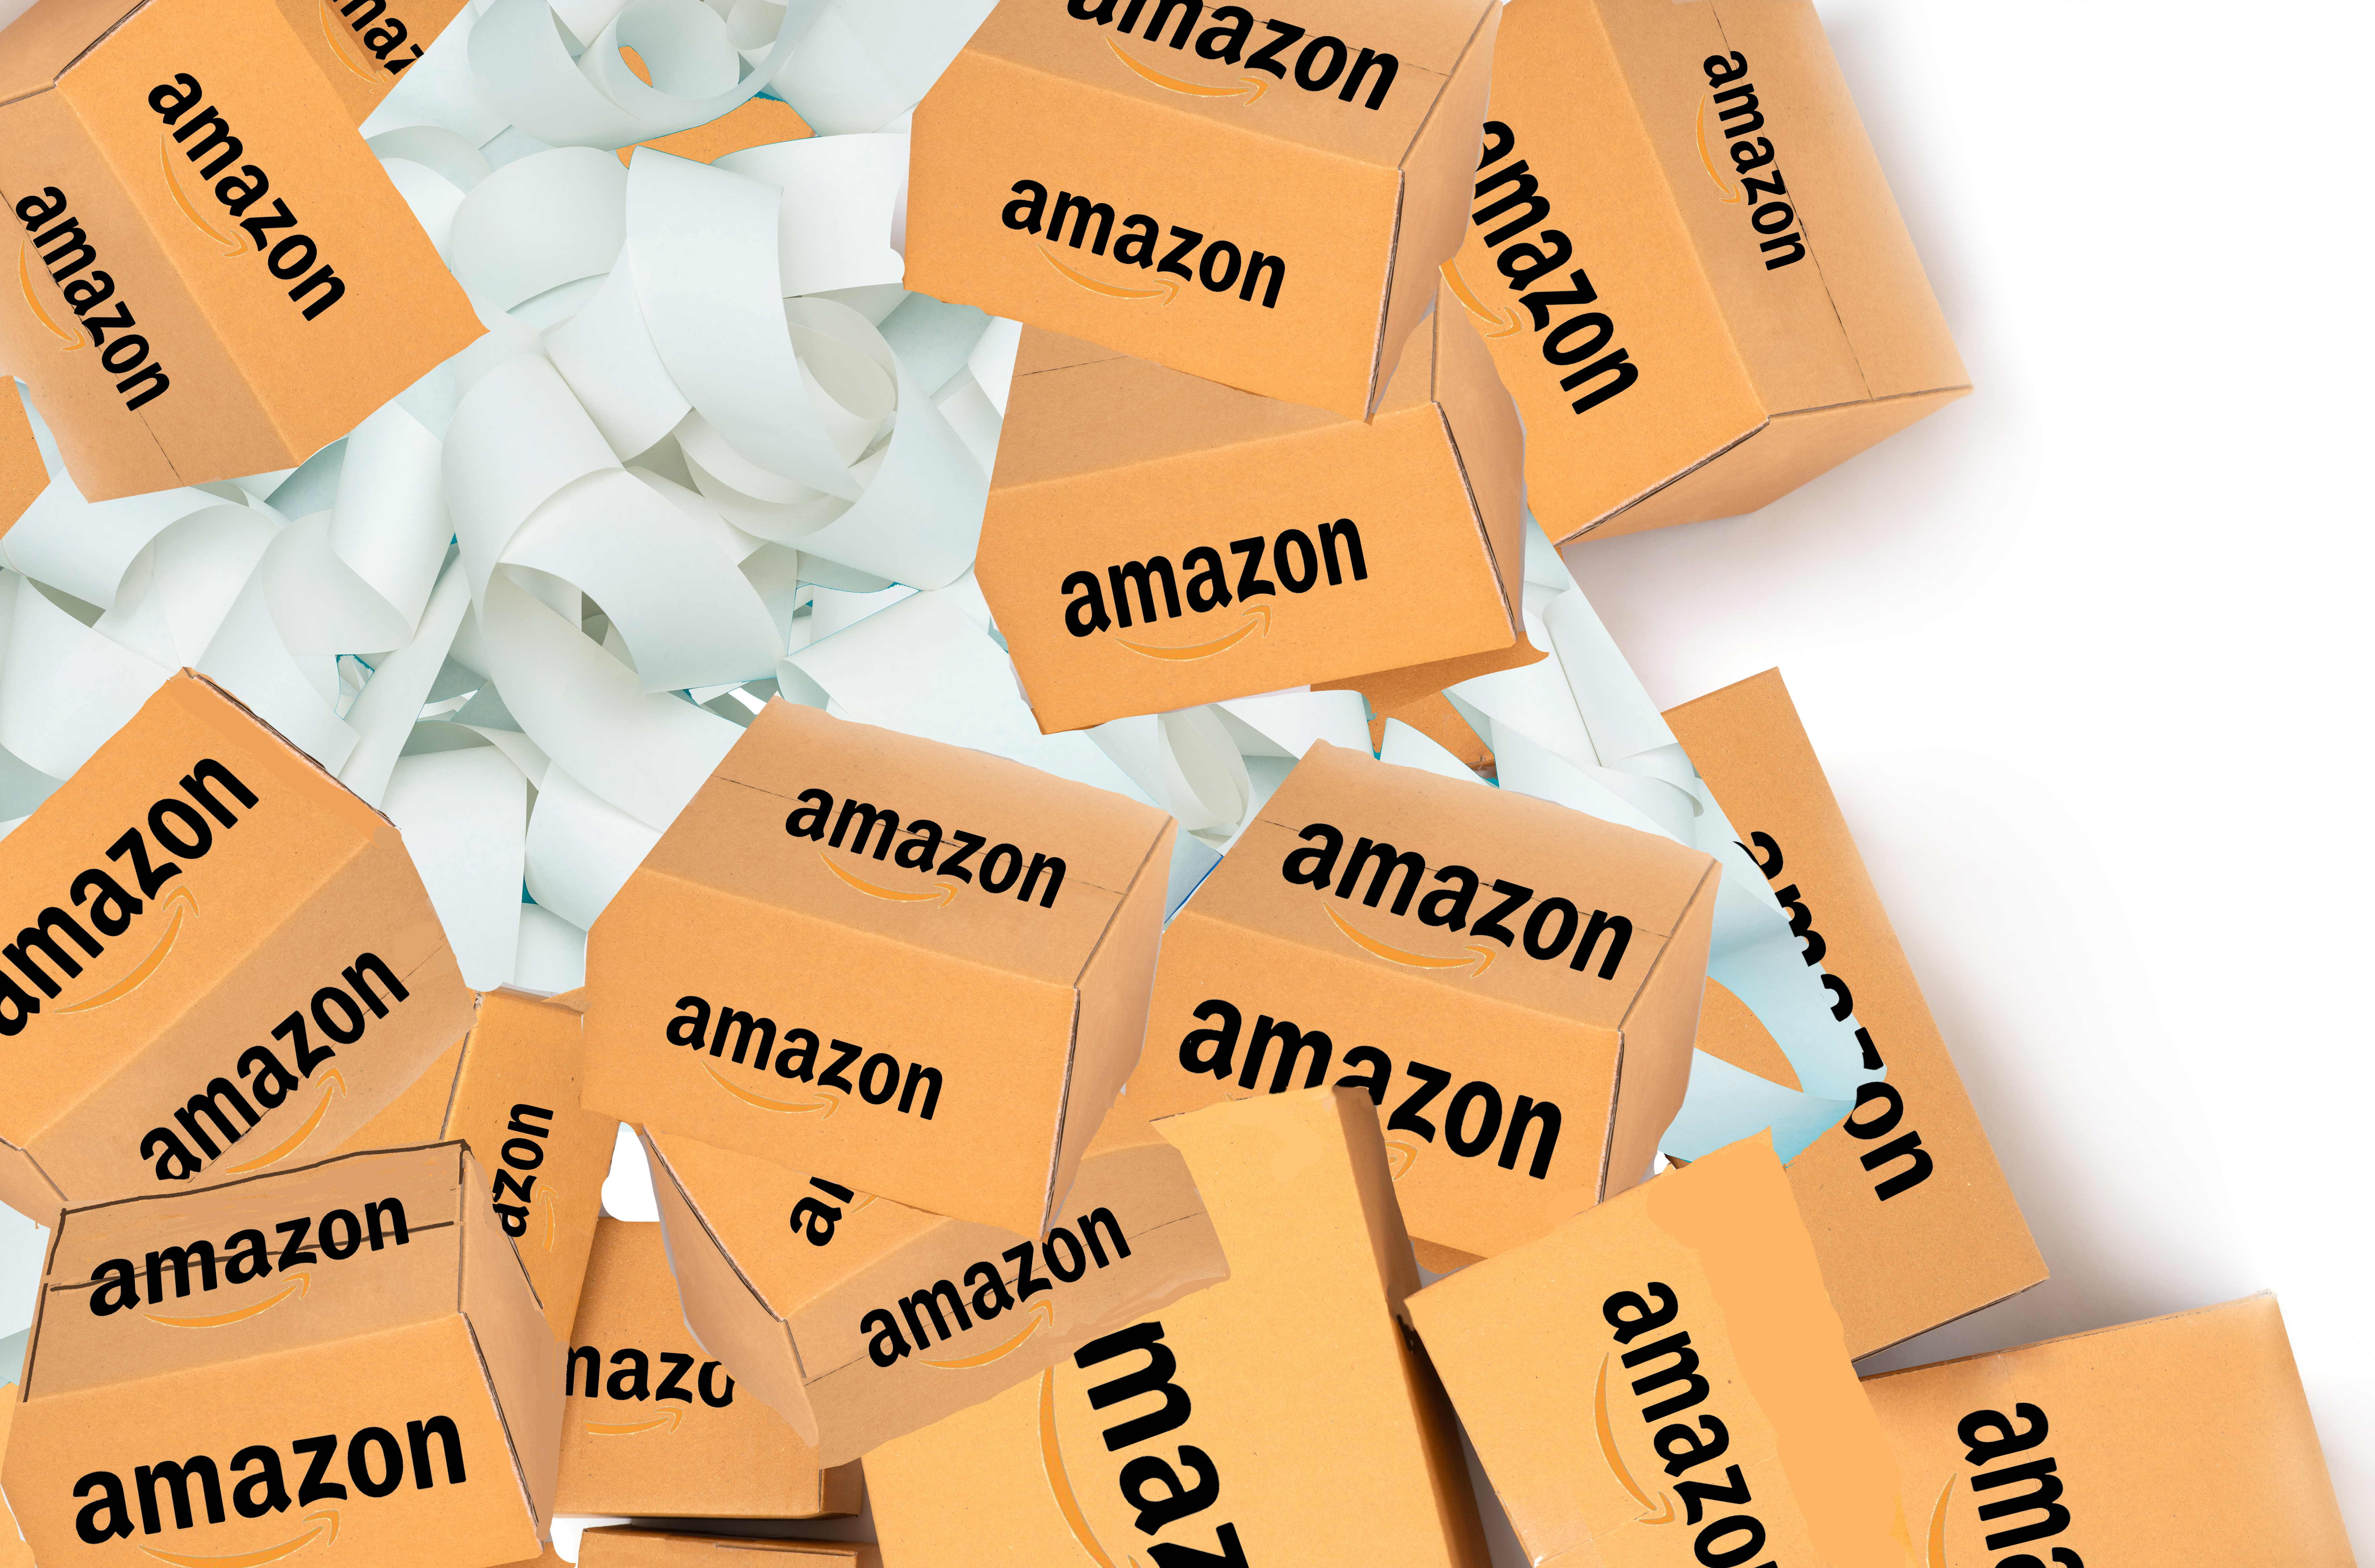 Data Analysis for Amazon Spending